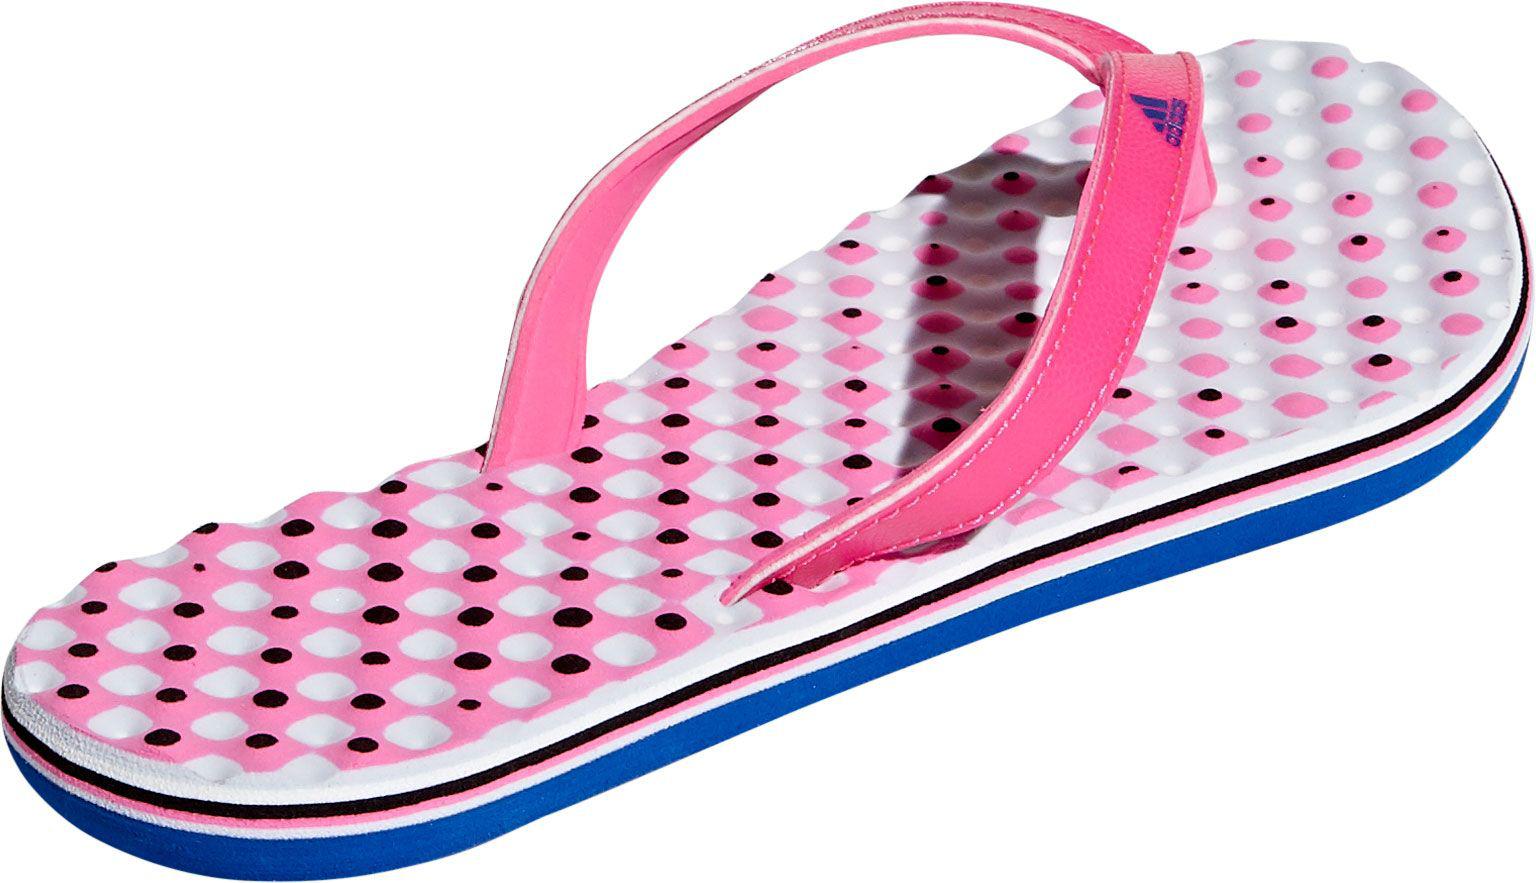 adidas Synthetic Eezay Dots Flip Flops in Pink/Blue (Pink) - Lyst